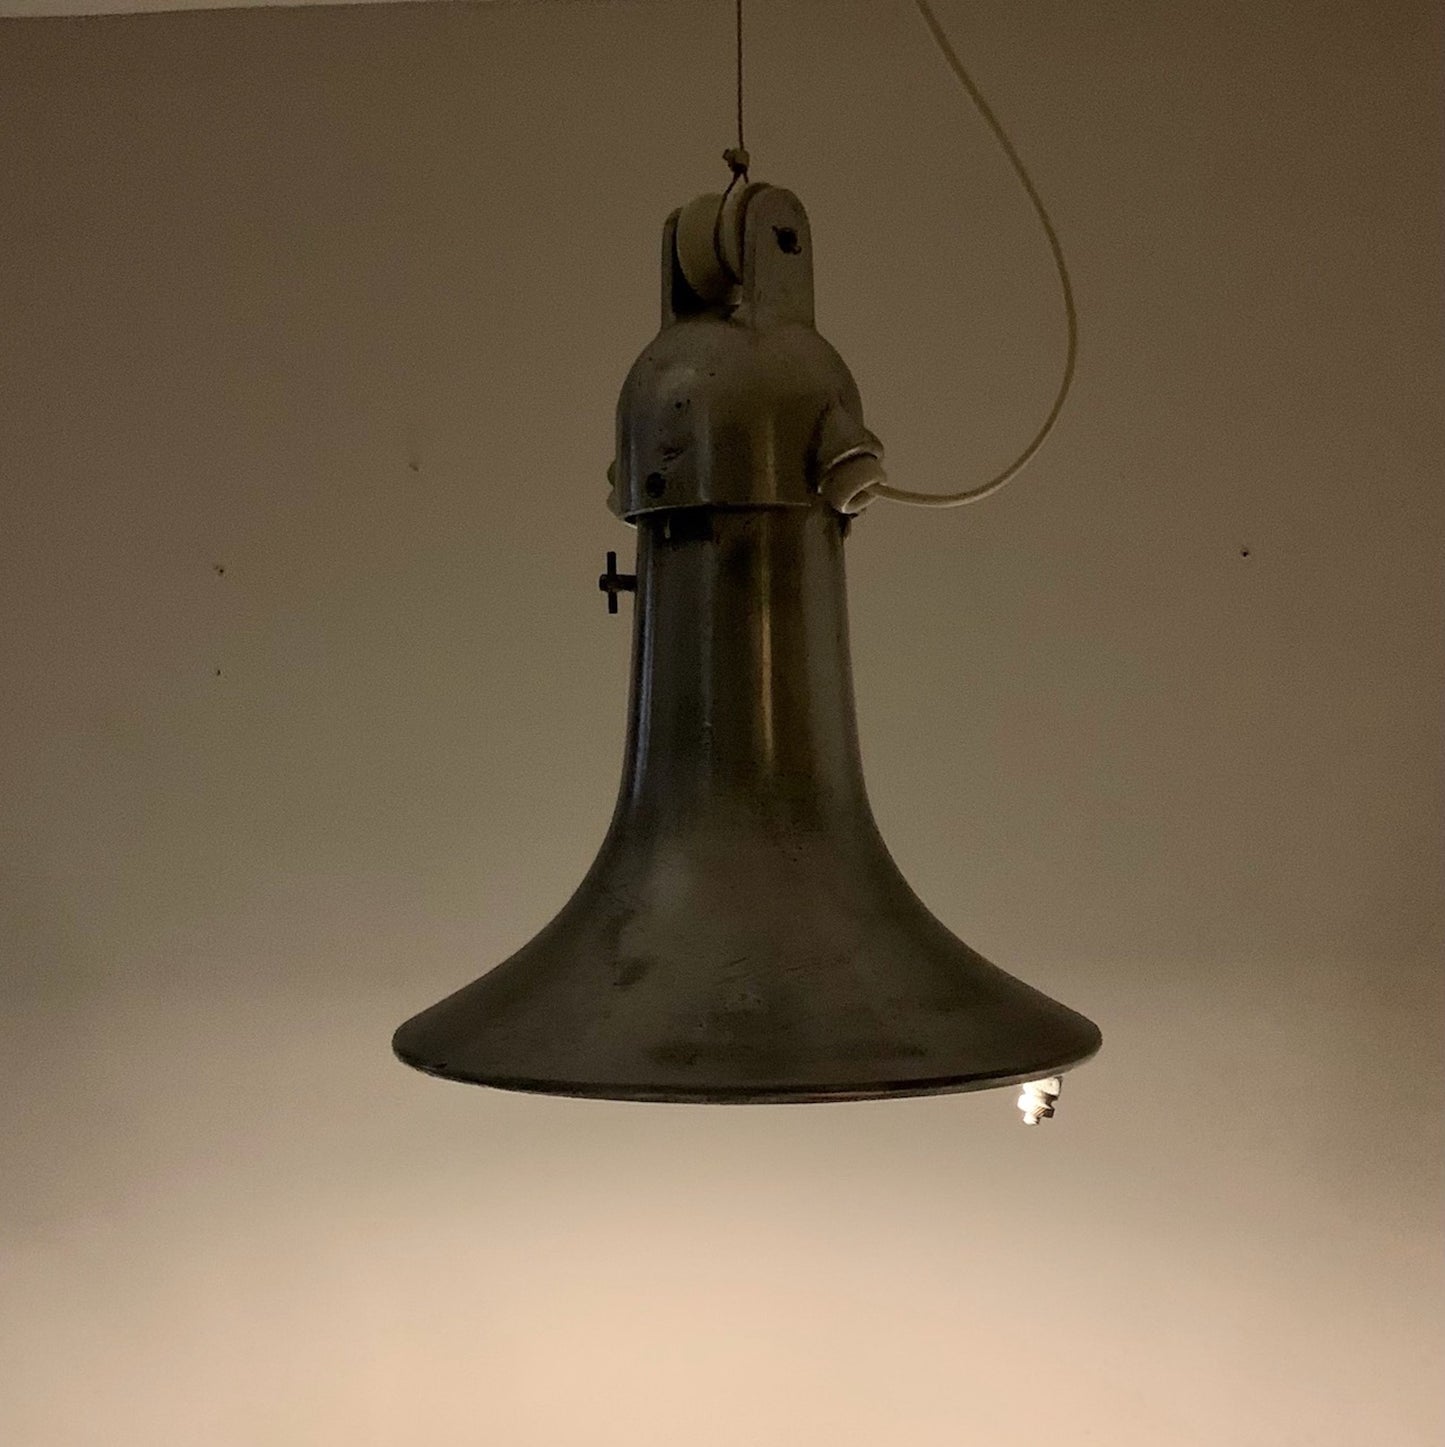 Large Hanging Lamp Industrial Design